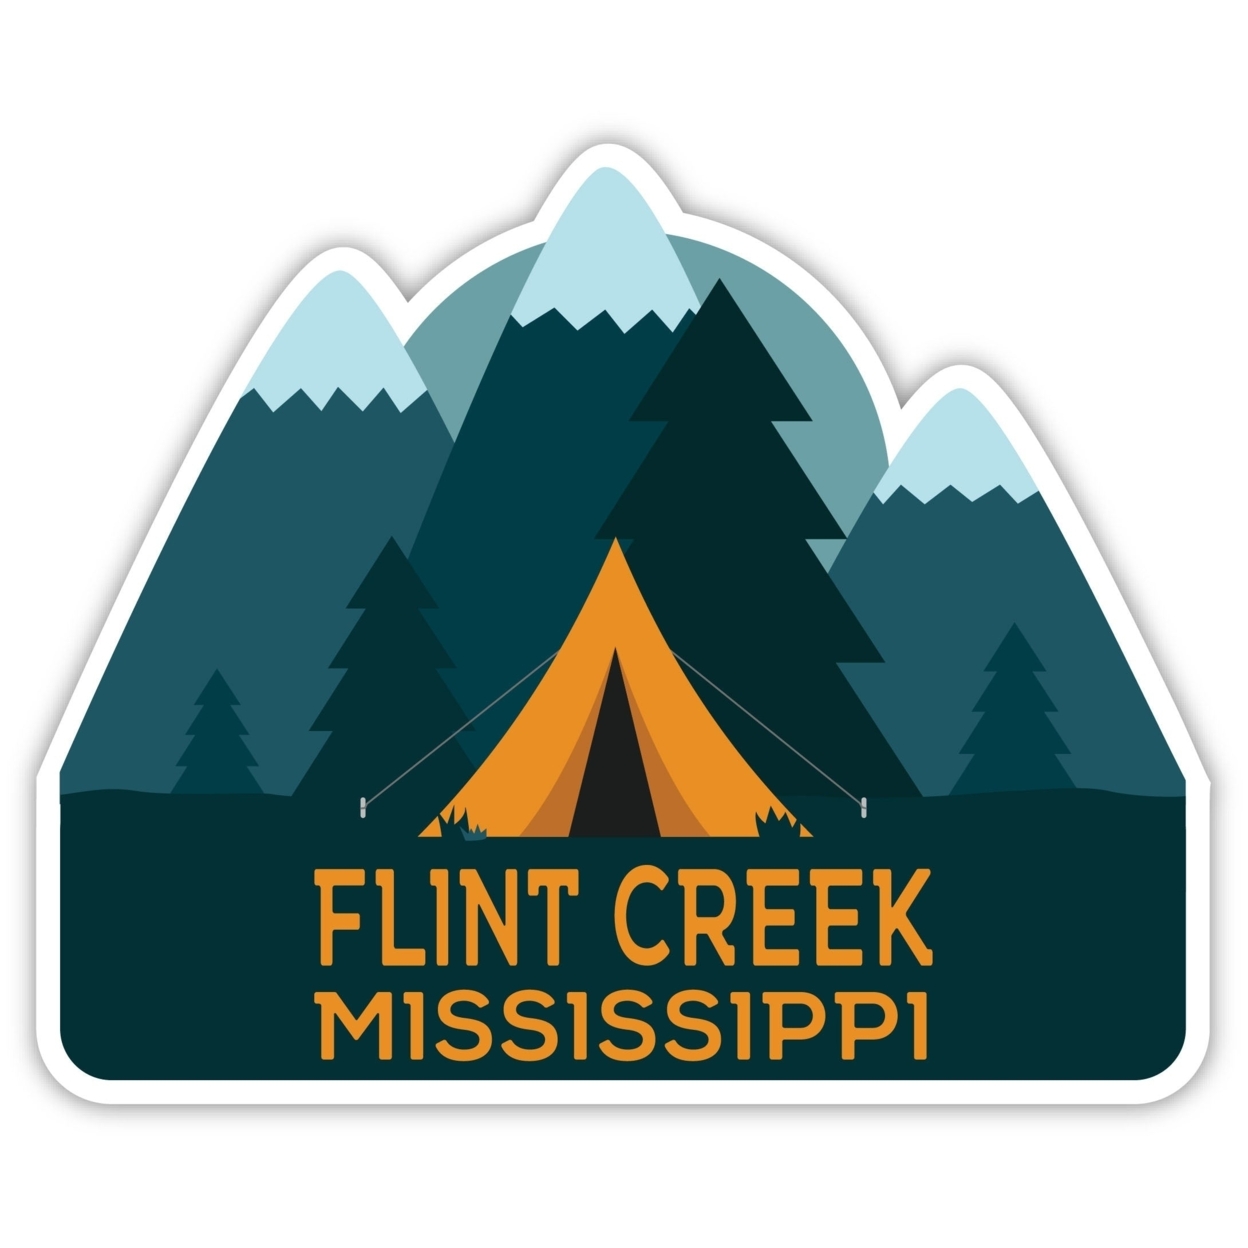 Flint Creek Mississippi Souvenir Decorative Stickers (Choose Theme And Size) - Single Unit, 8-Inch, Tent